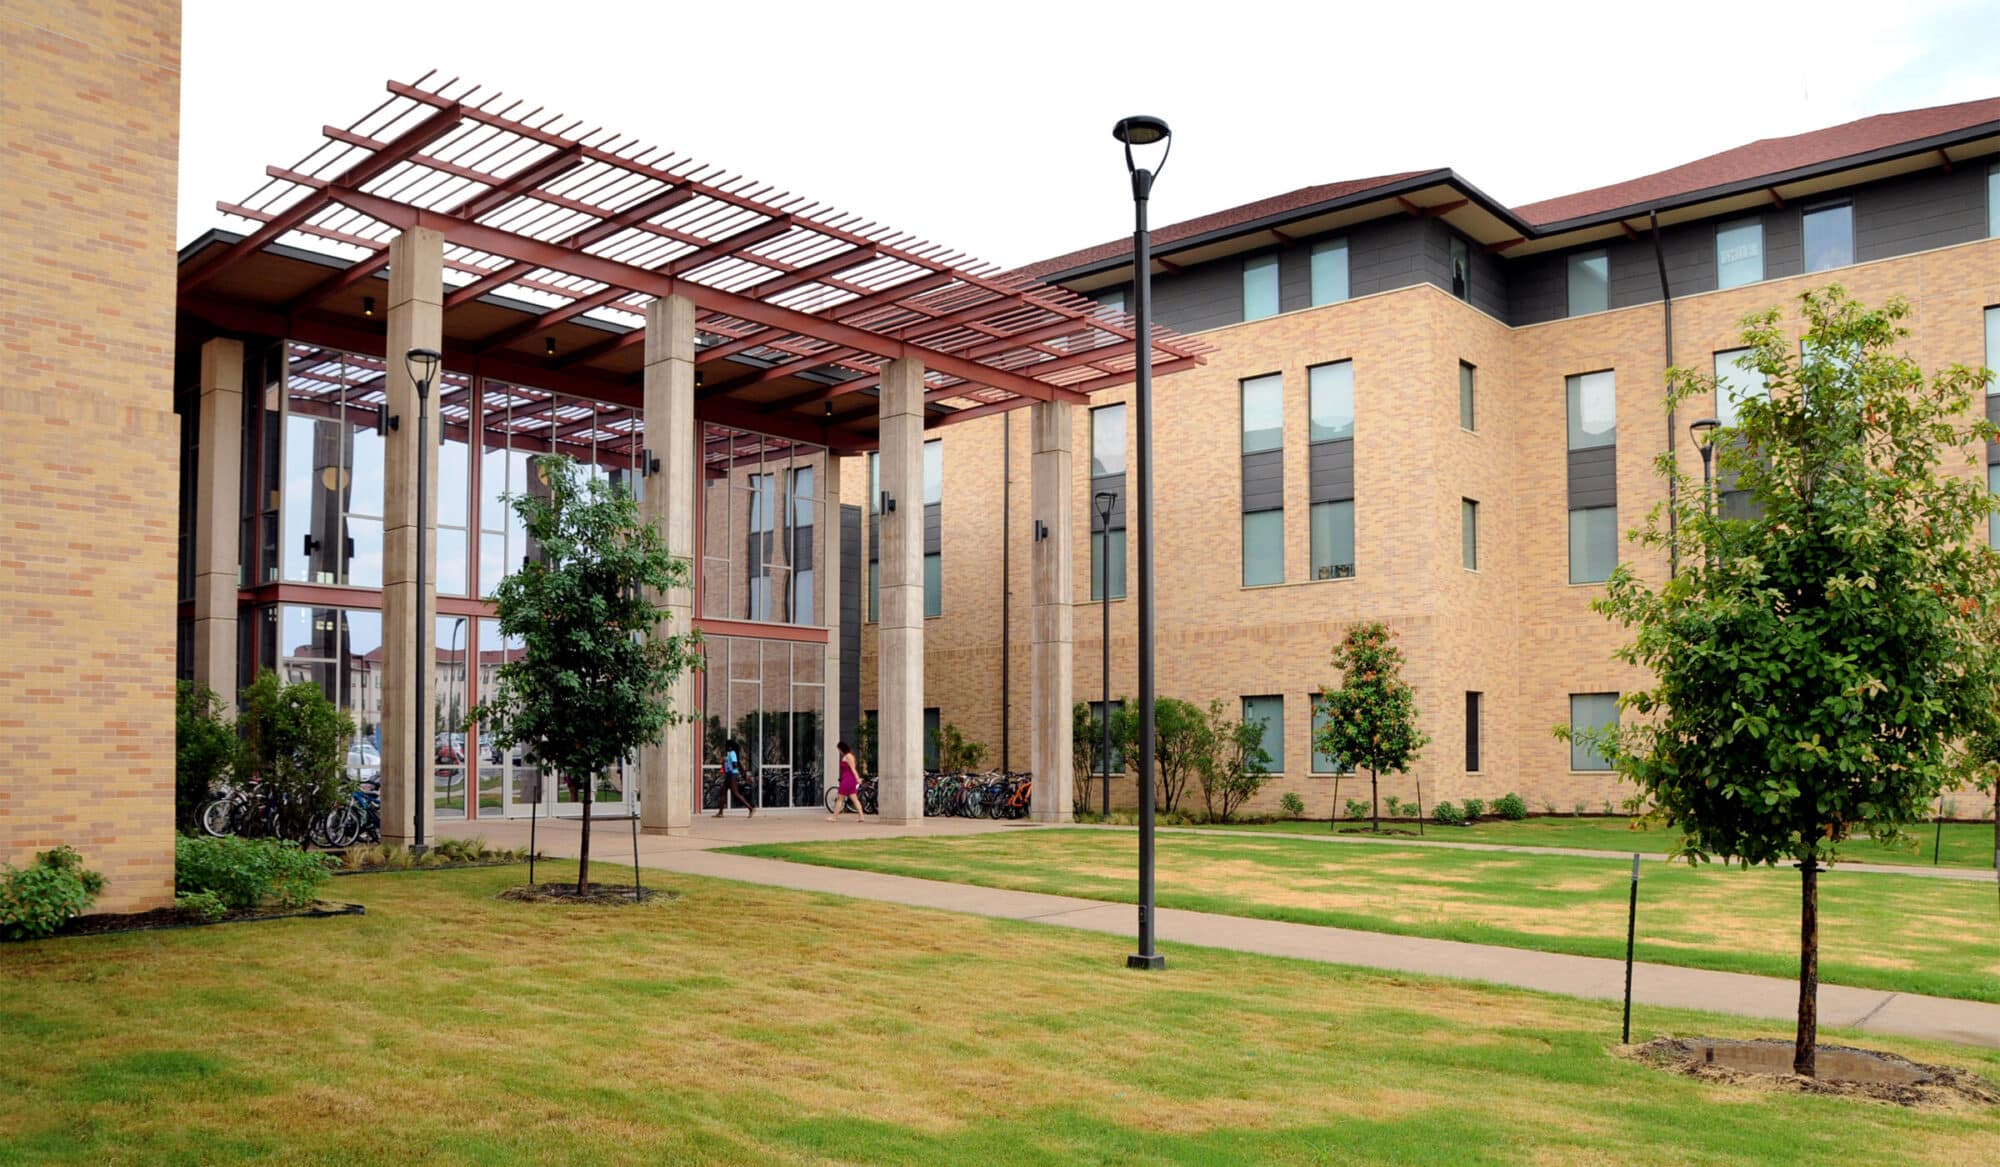 Modern university building with landscaped garden.